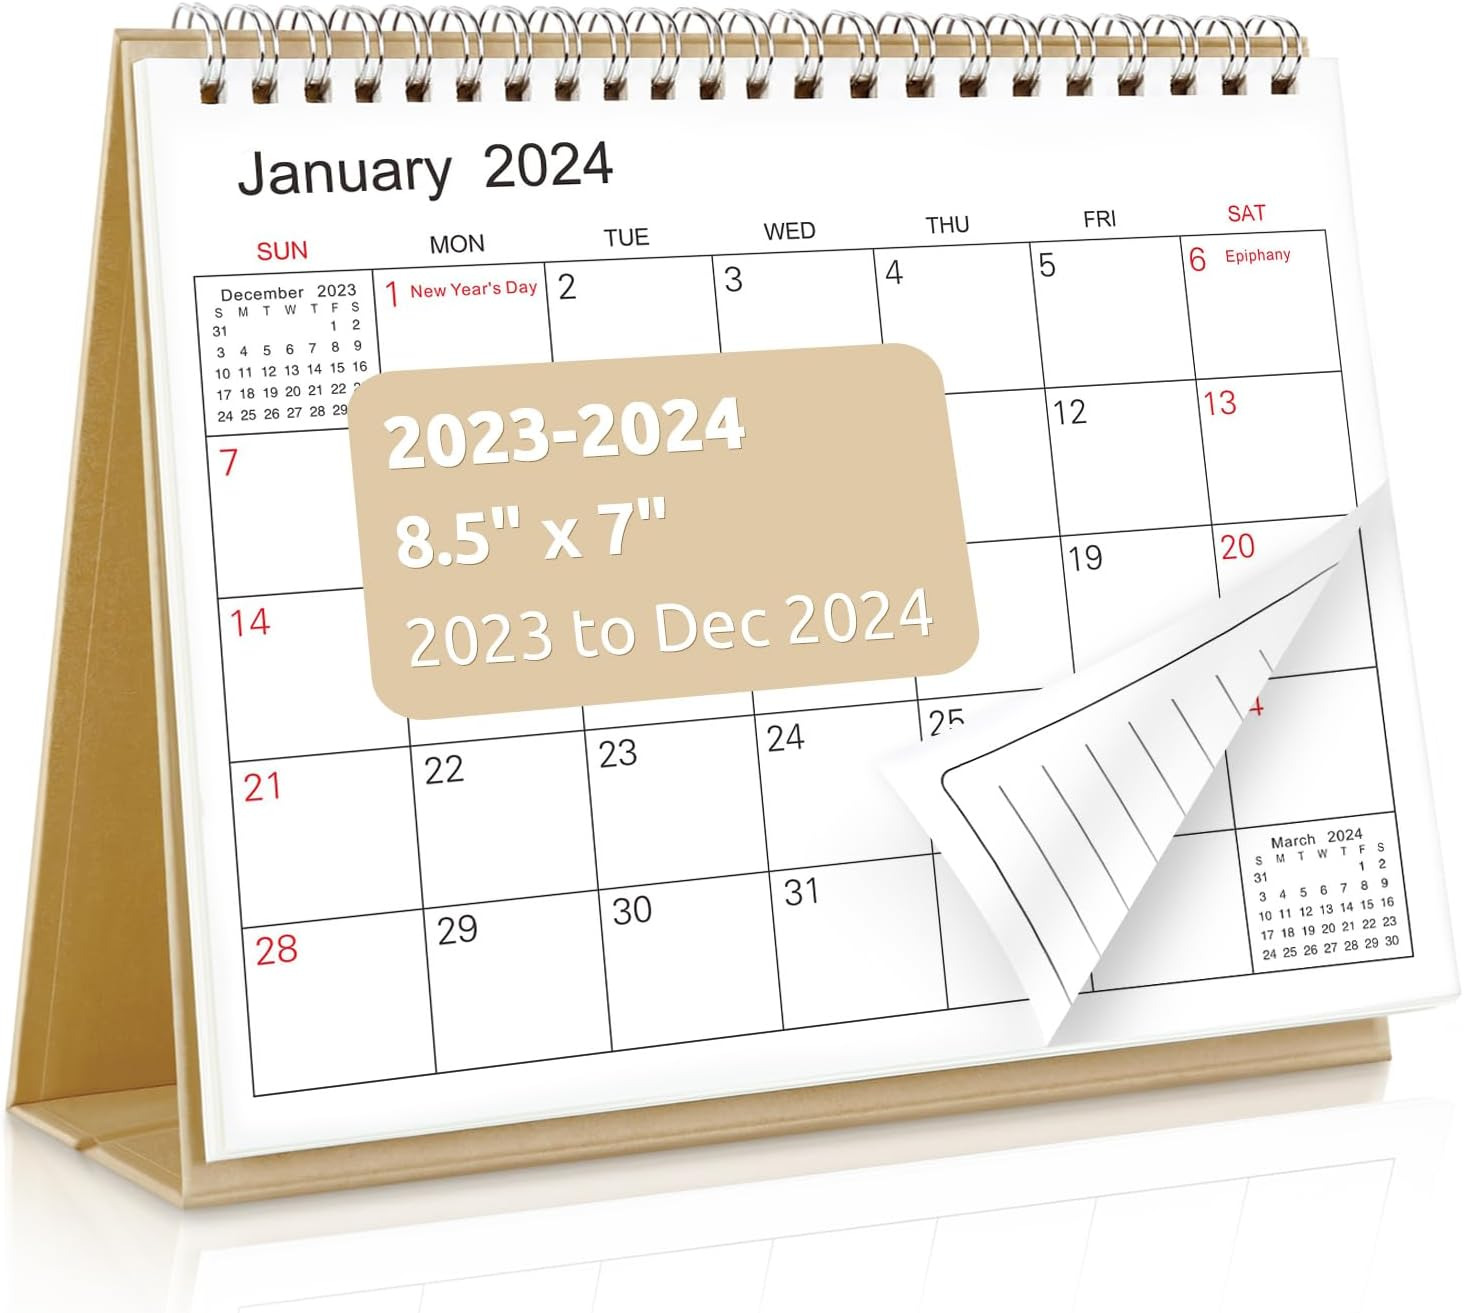 SKYDUE Calendar 2023-2024, Small Standing Desk Calendar, from Oct.2023 to Dec.20